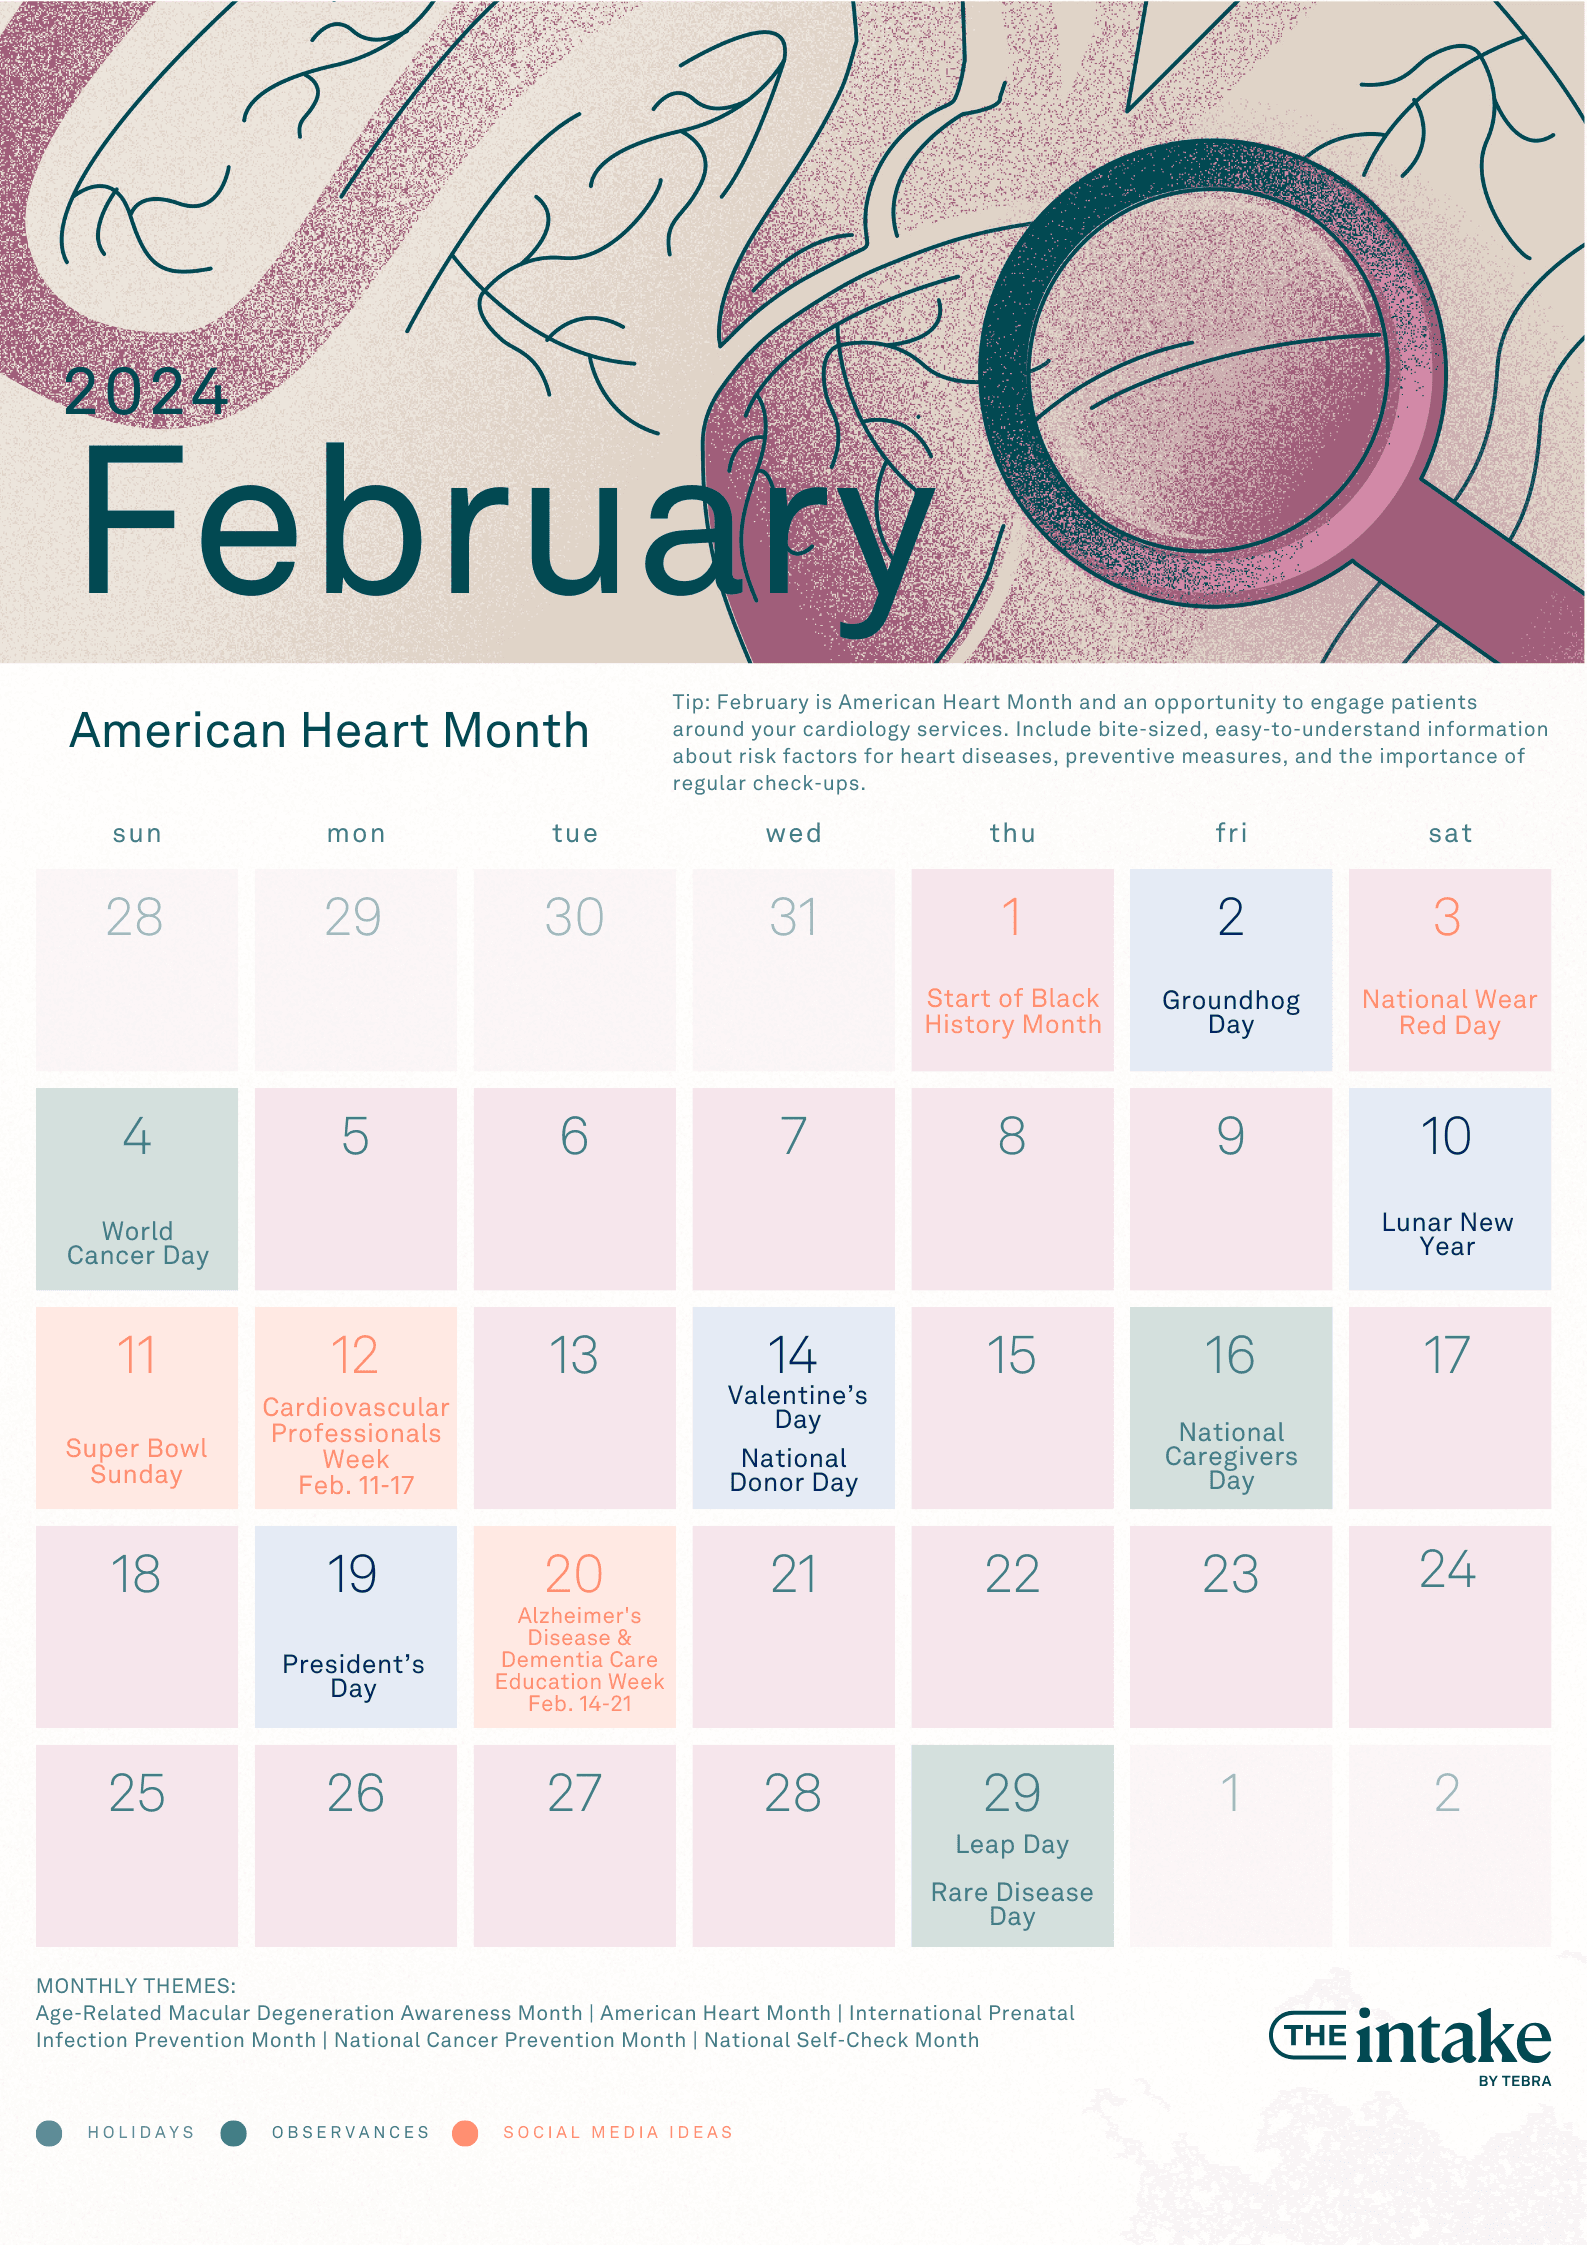 Free healthcare observances calendar February 2024 The Intake